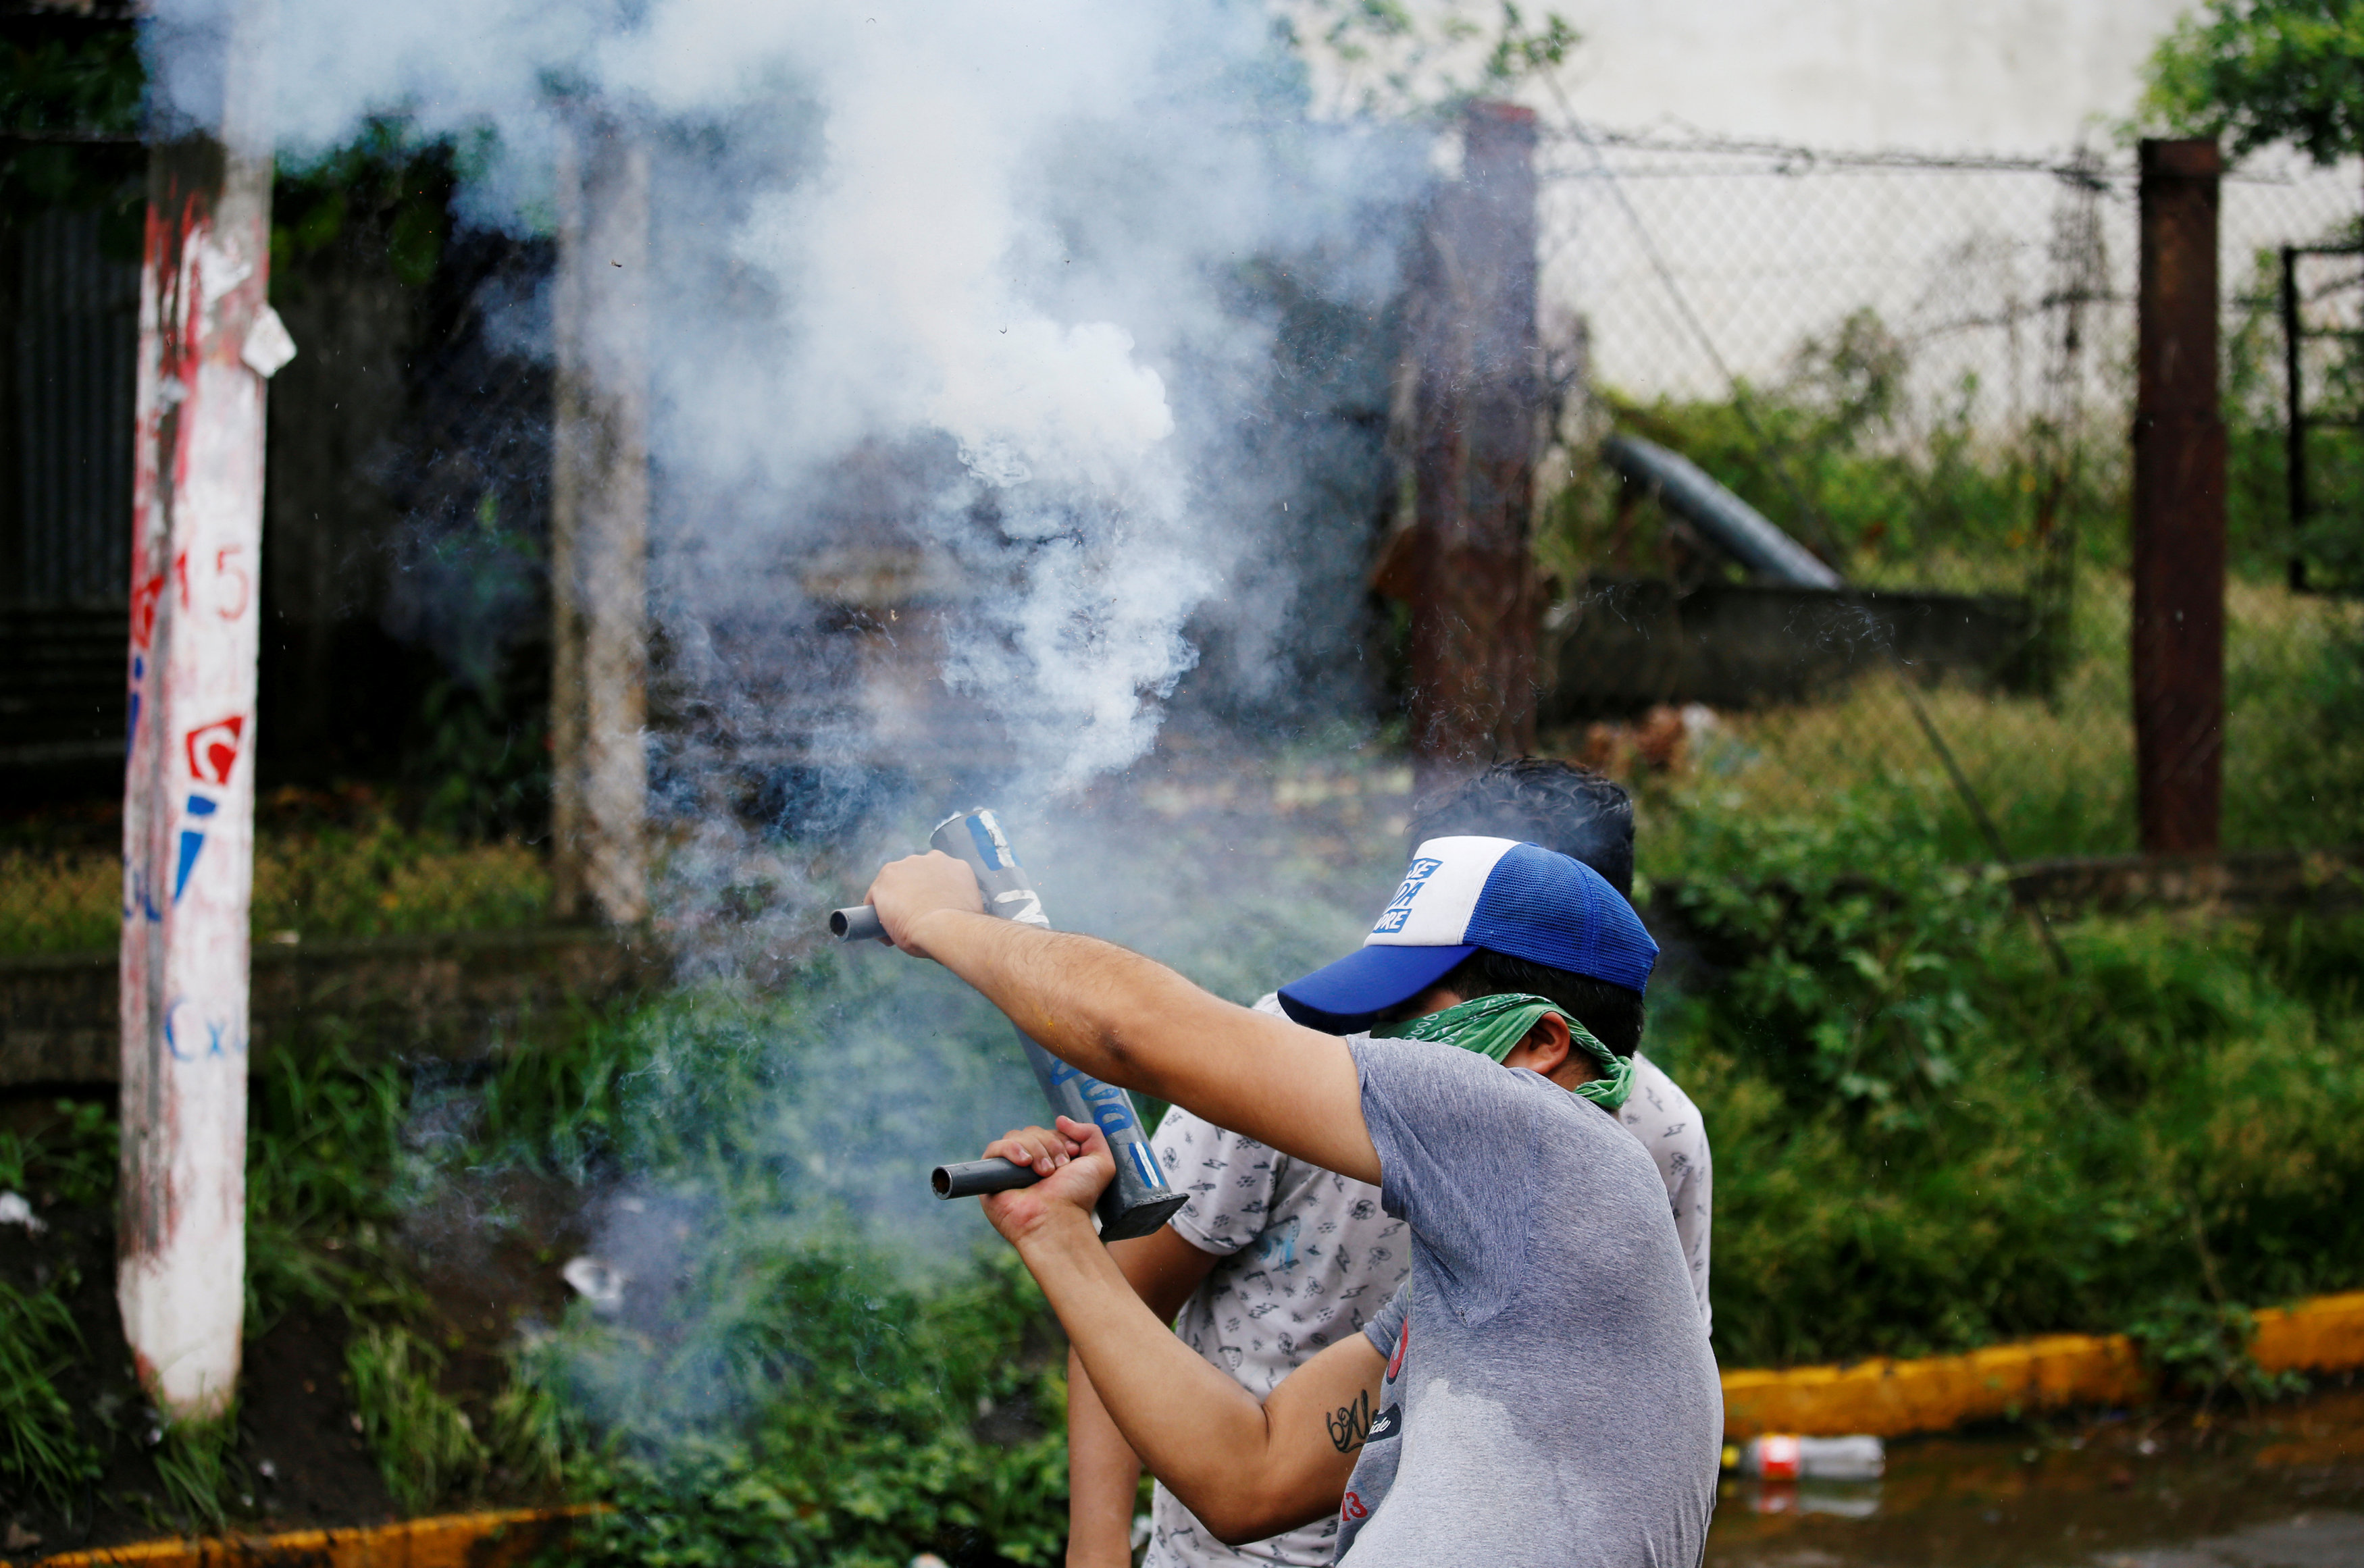 A demonstrator holds a homemade mortar during a protest against Nicaraguan President Daniel Ortega's government in Granada, Nicaragua June 6, 2018.